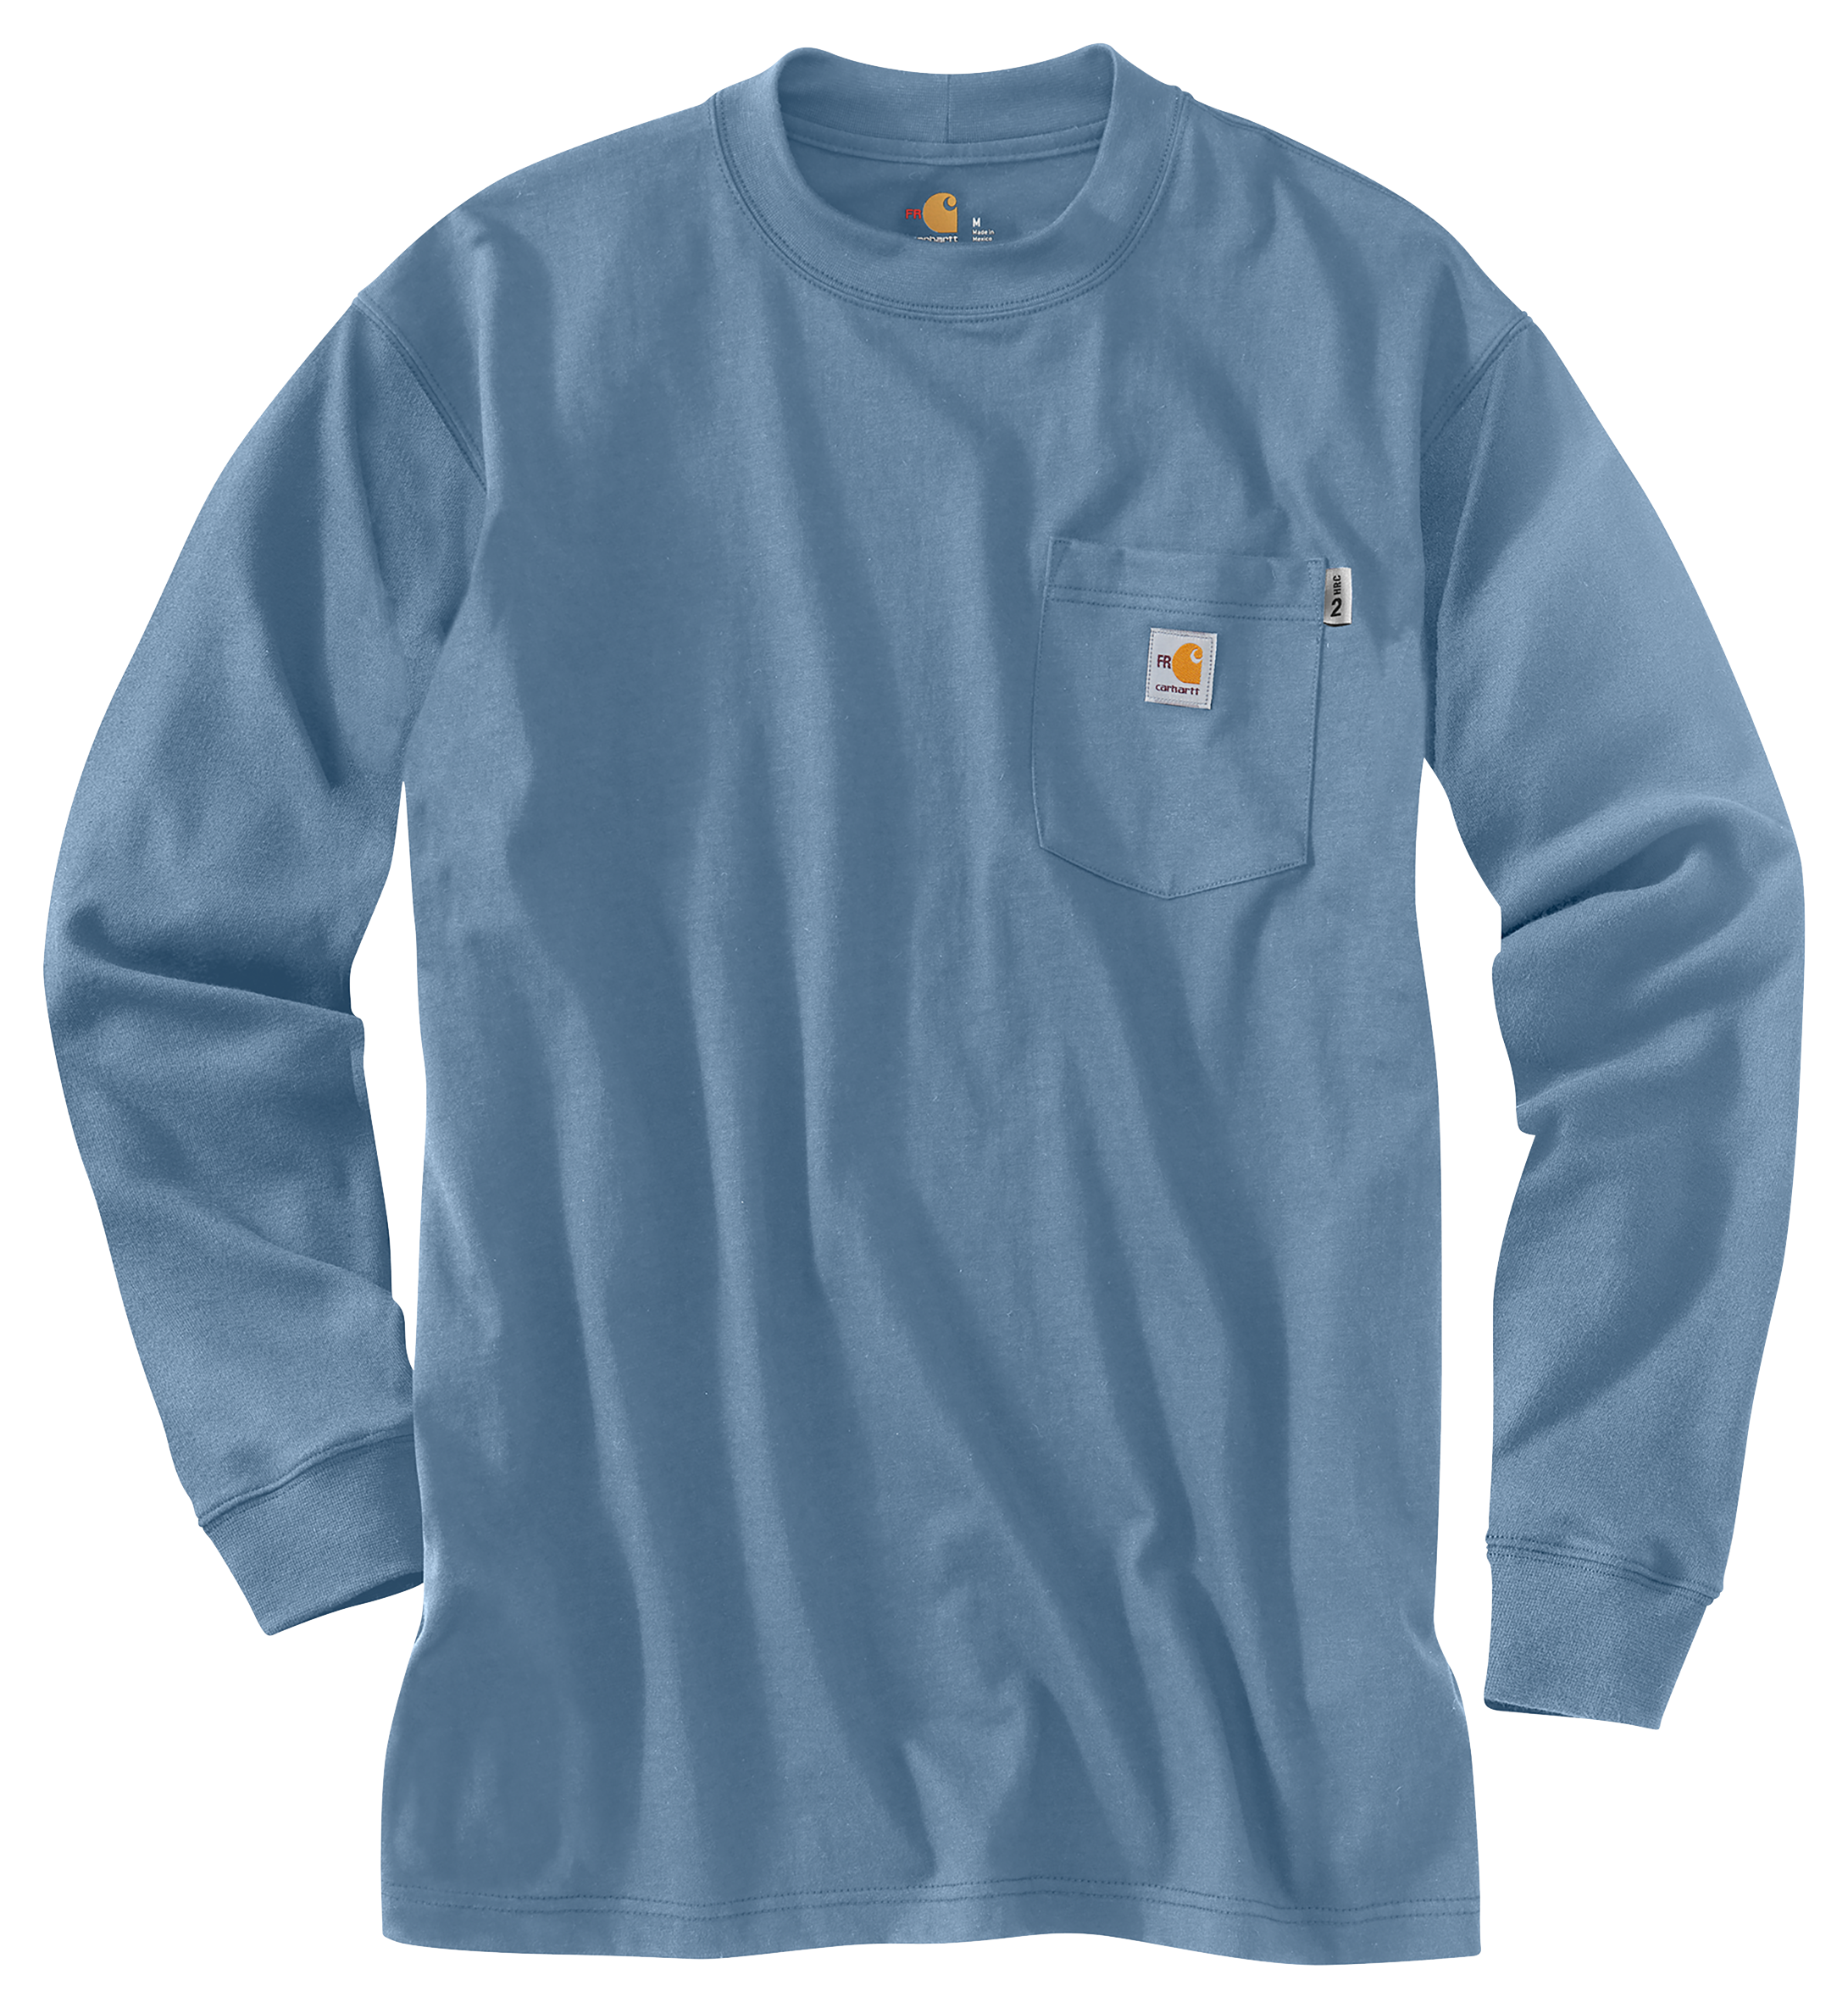 Carhartt Flame-Resistant Carhartt Force Cotton Long-Sleeve T-Shirt for Men